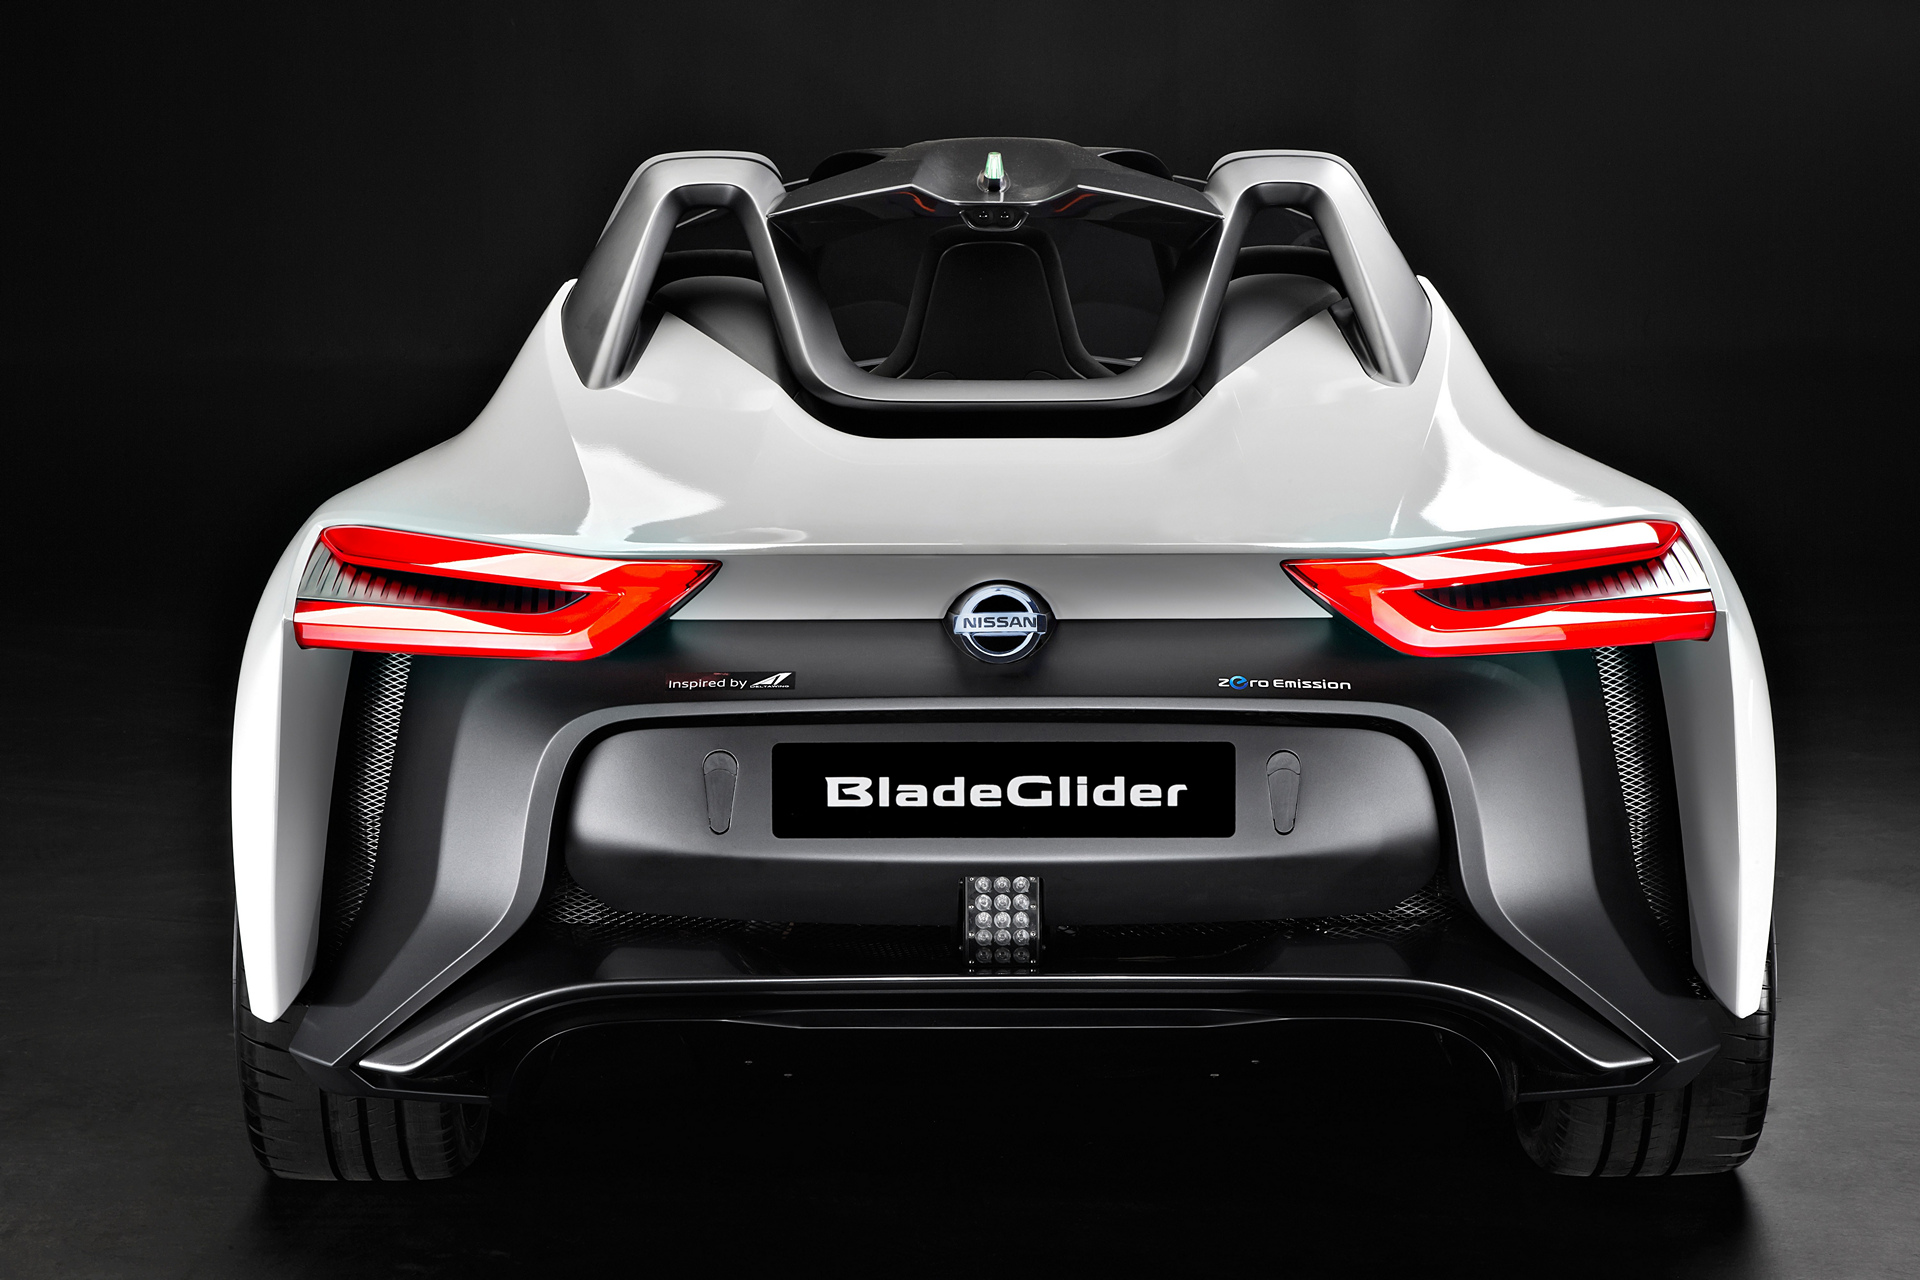 Nissan BladeGlider © Nissan Motor Co., Ltd.